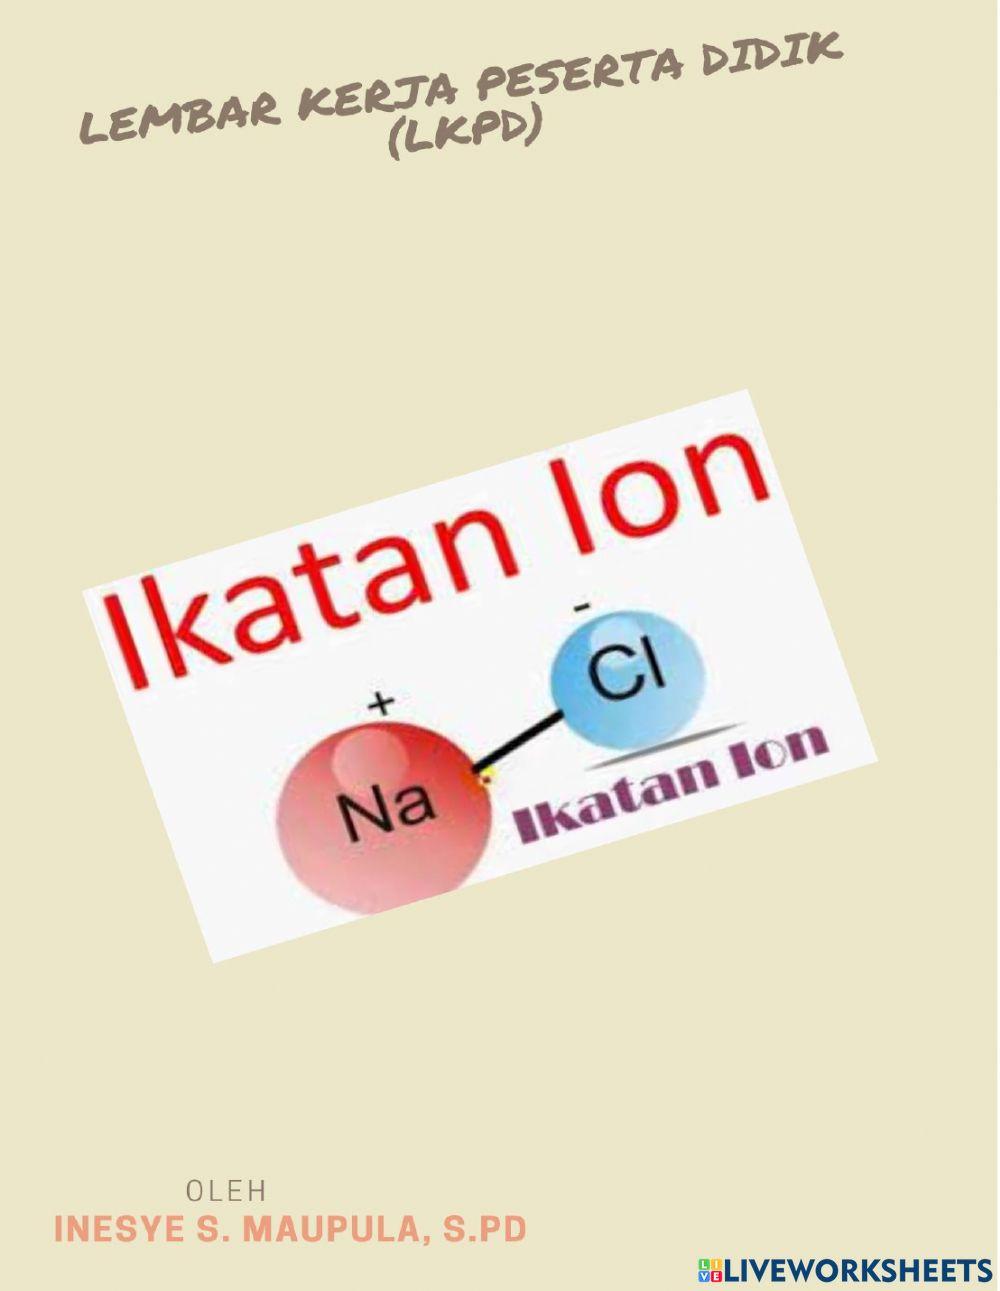 Lkpd ikatan ion